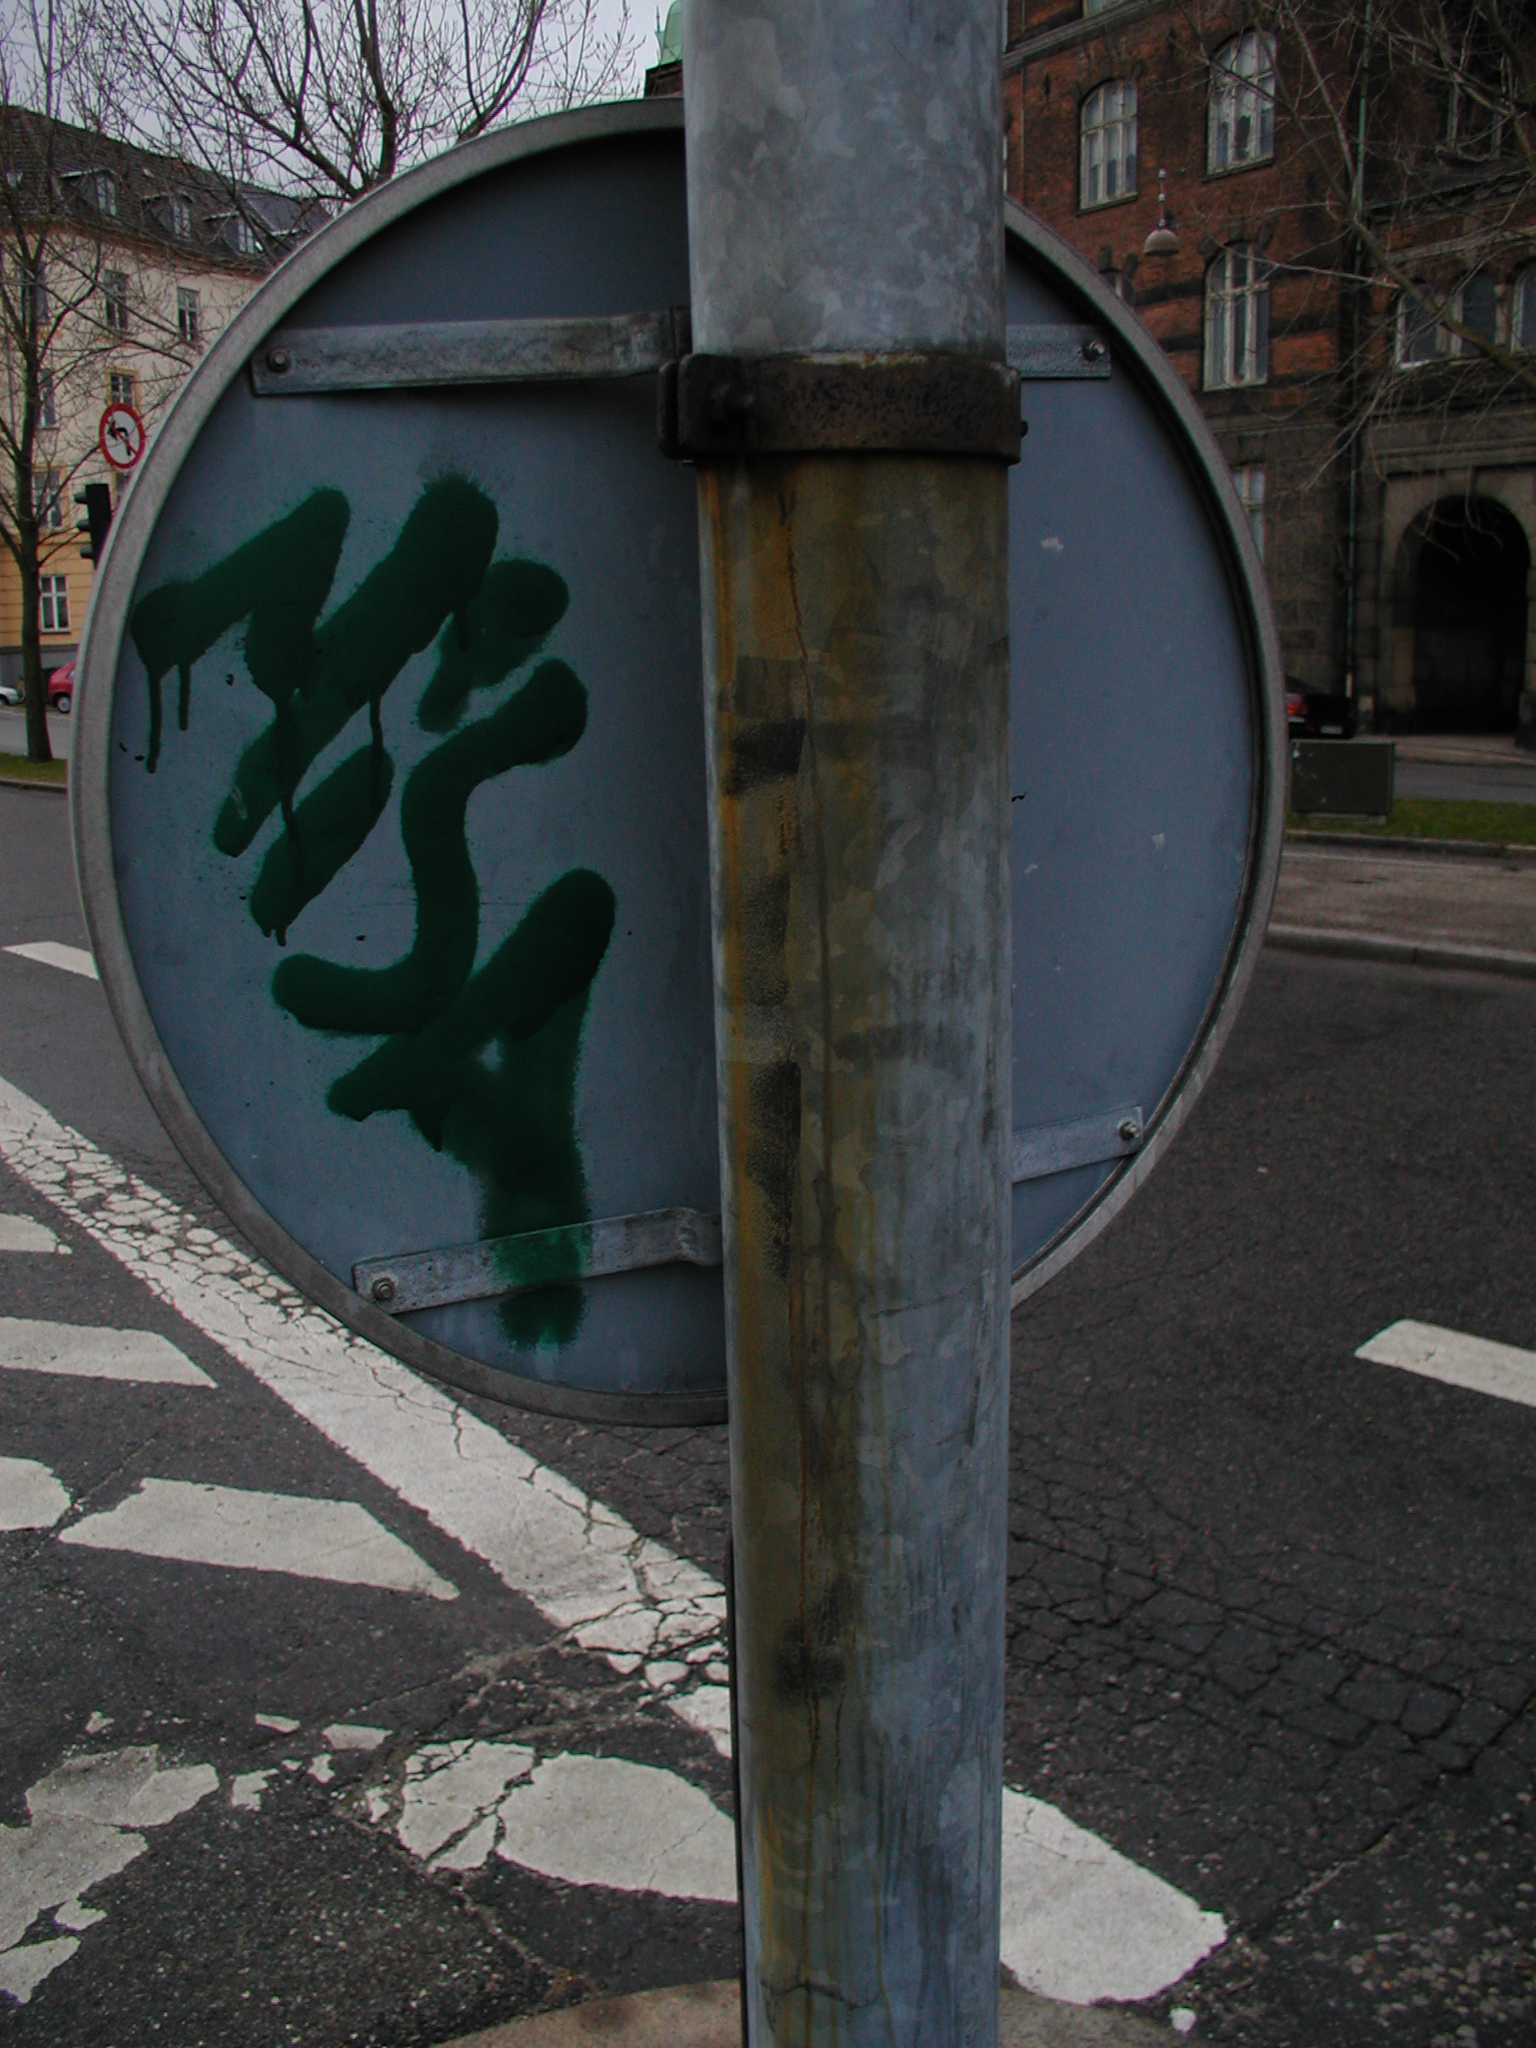 tabus sign back traffic trafficsign graffiti urban inner city